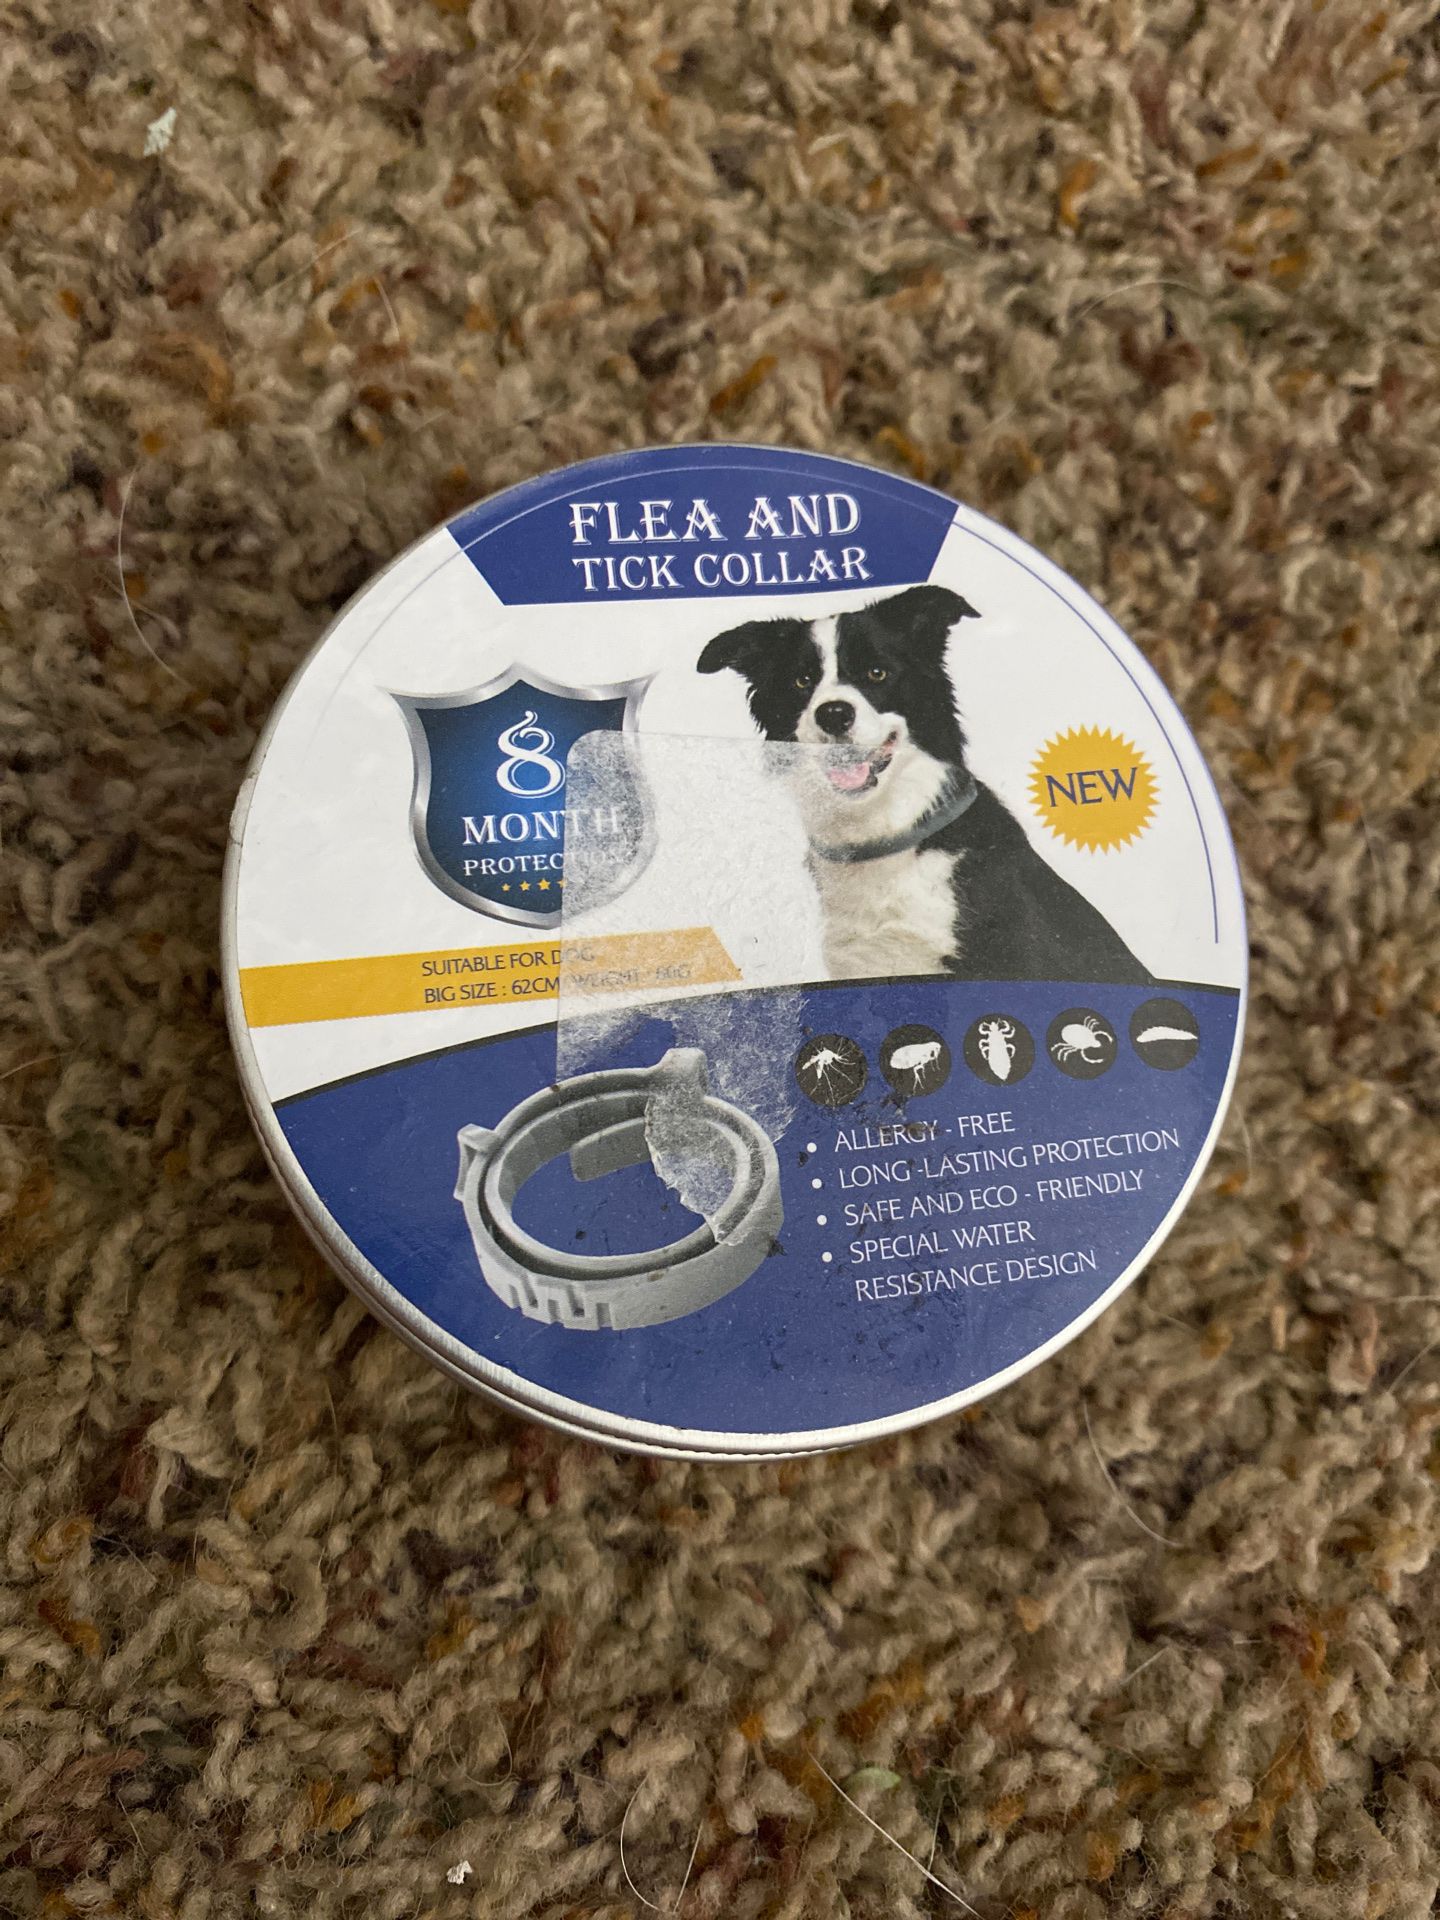 Flea and tick collar pets